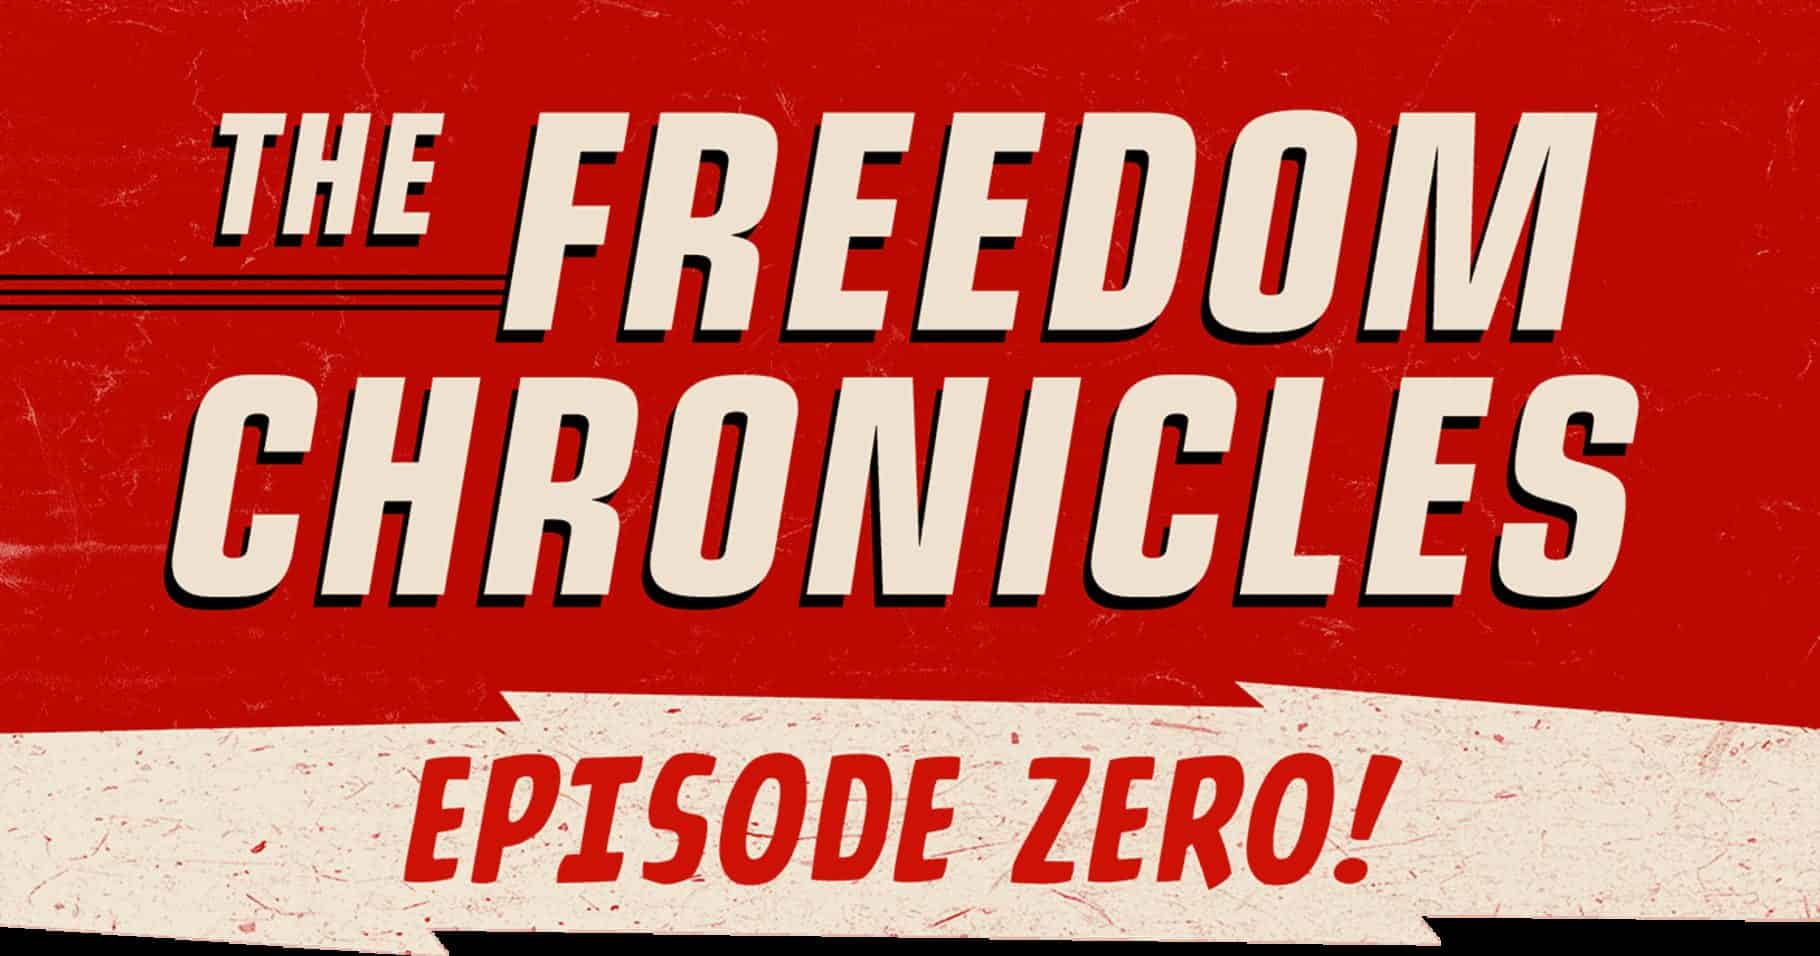 Wolfenstein II: The Freedom Chronicles - Episode Zero